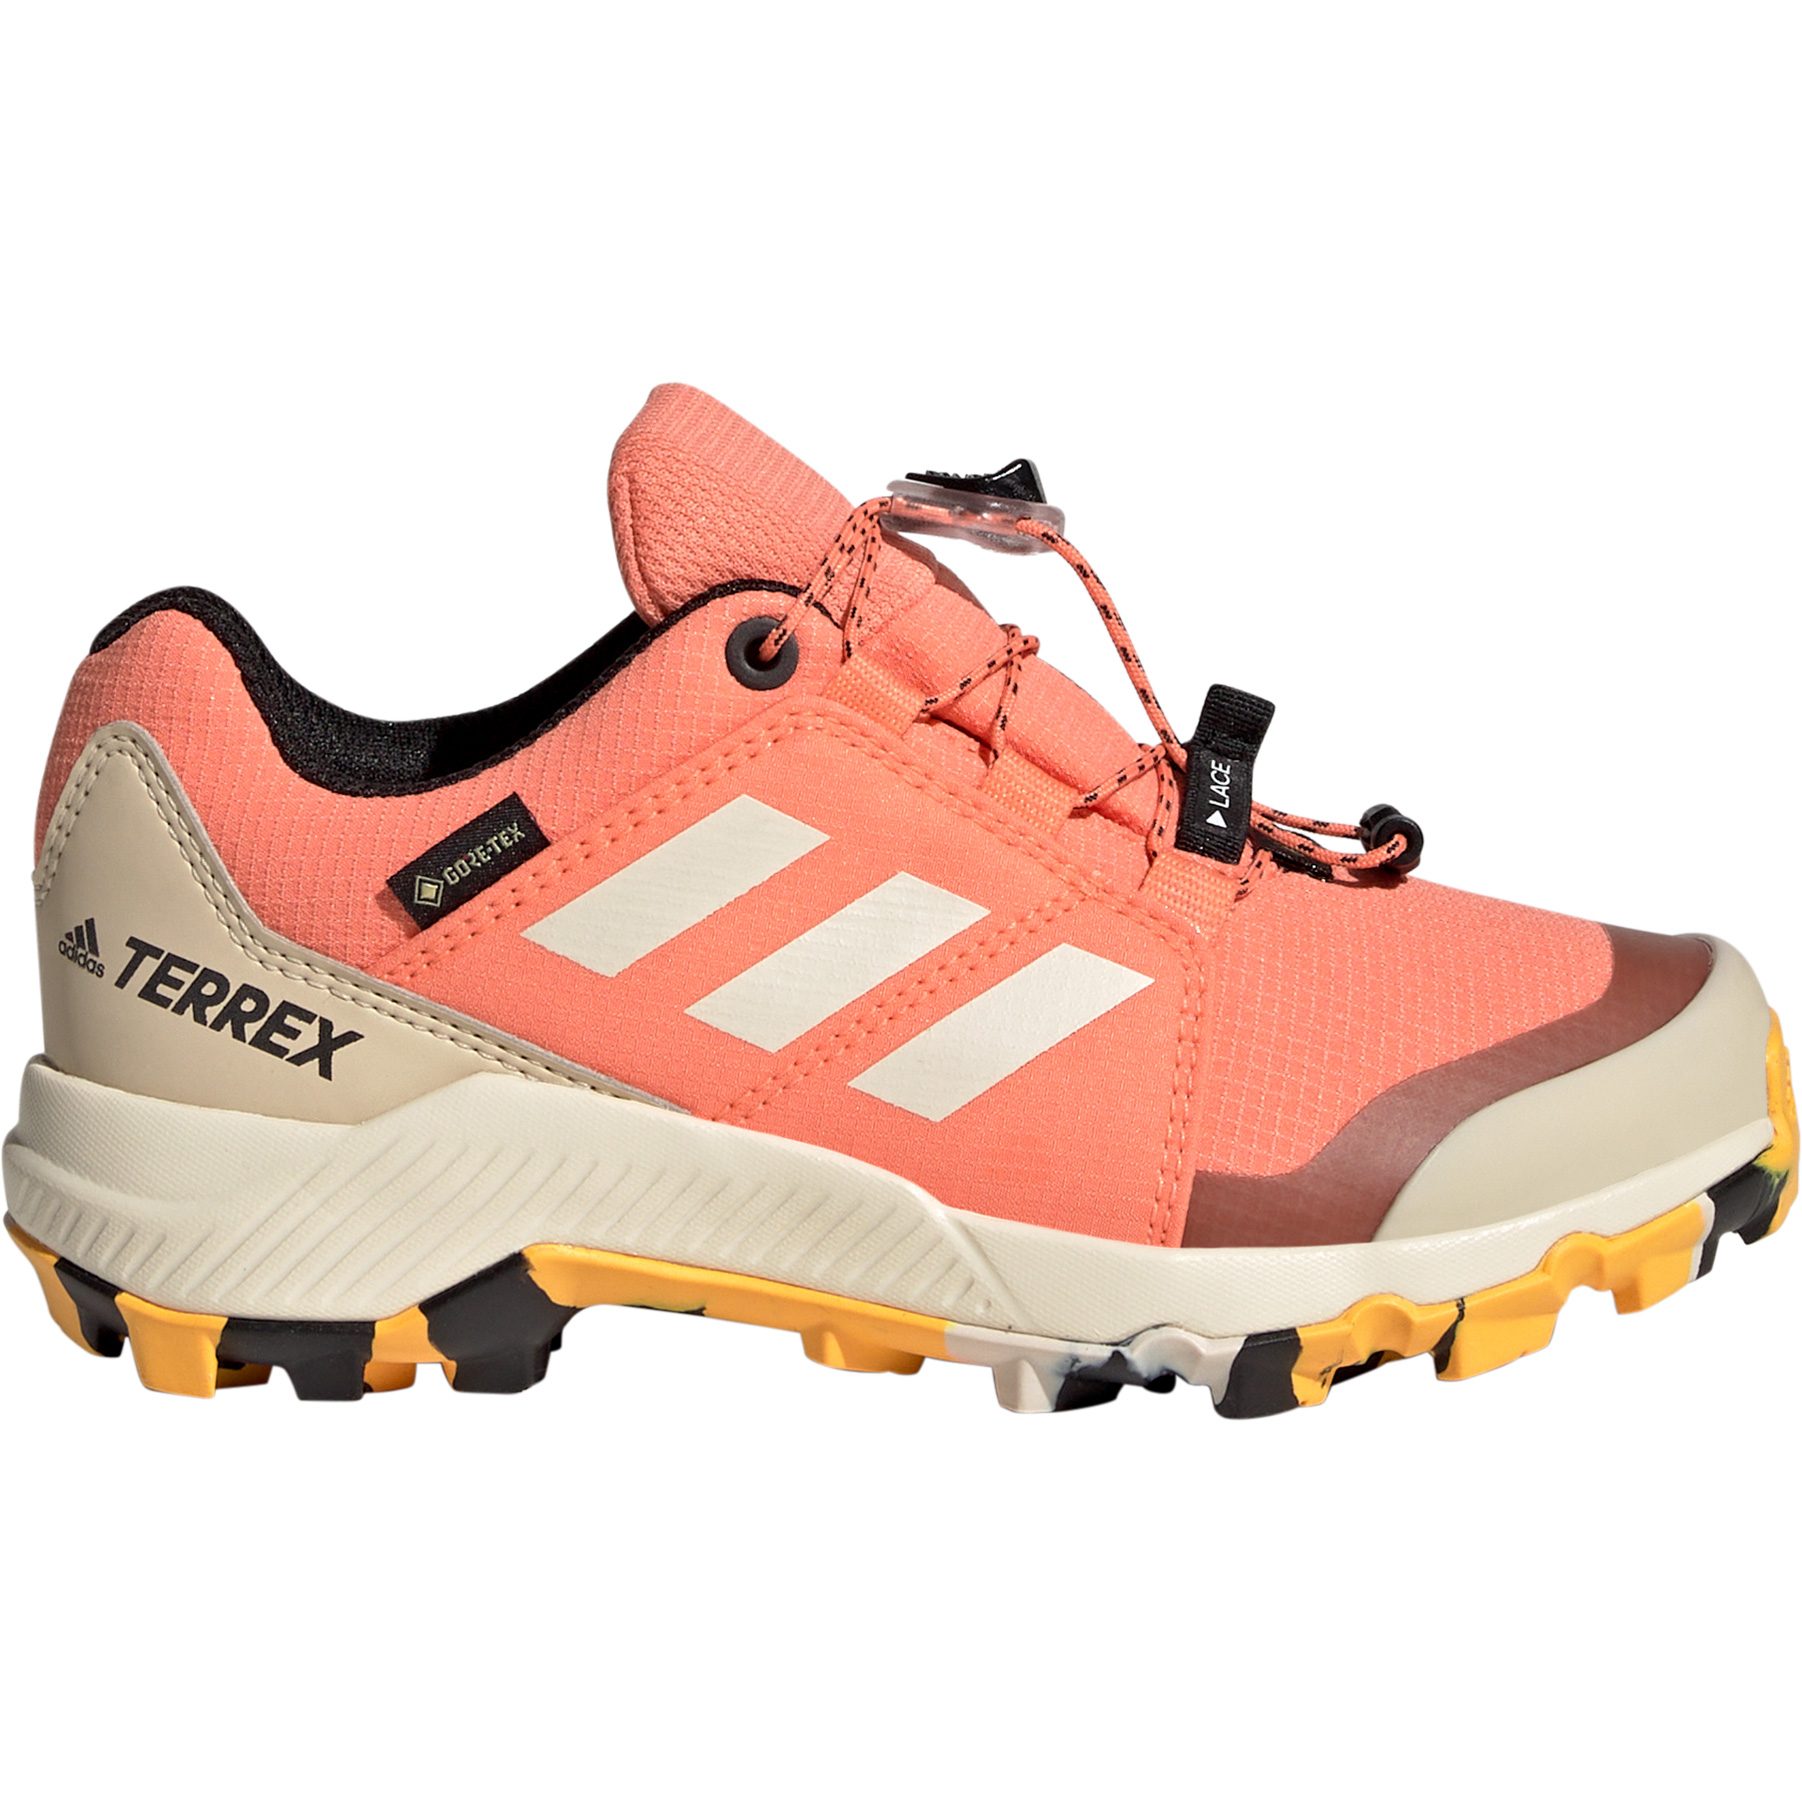 TERREX at GORE-TEX® Bittl Hiking Shop adidas Shoes Terrex fusion - Kids Sport coral